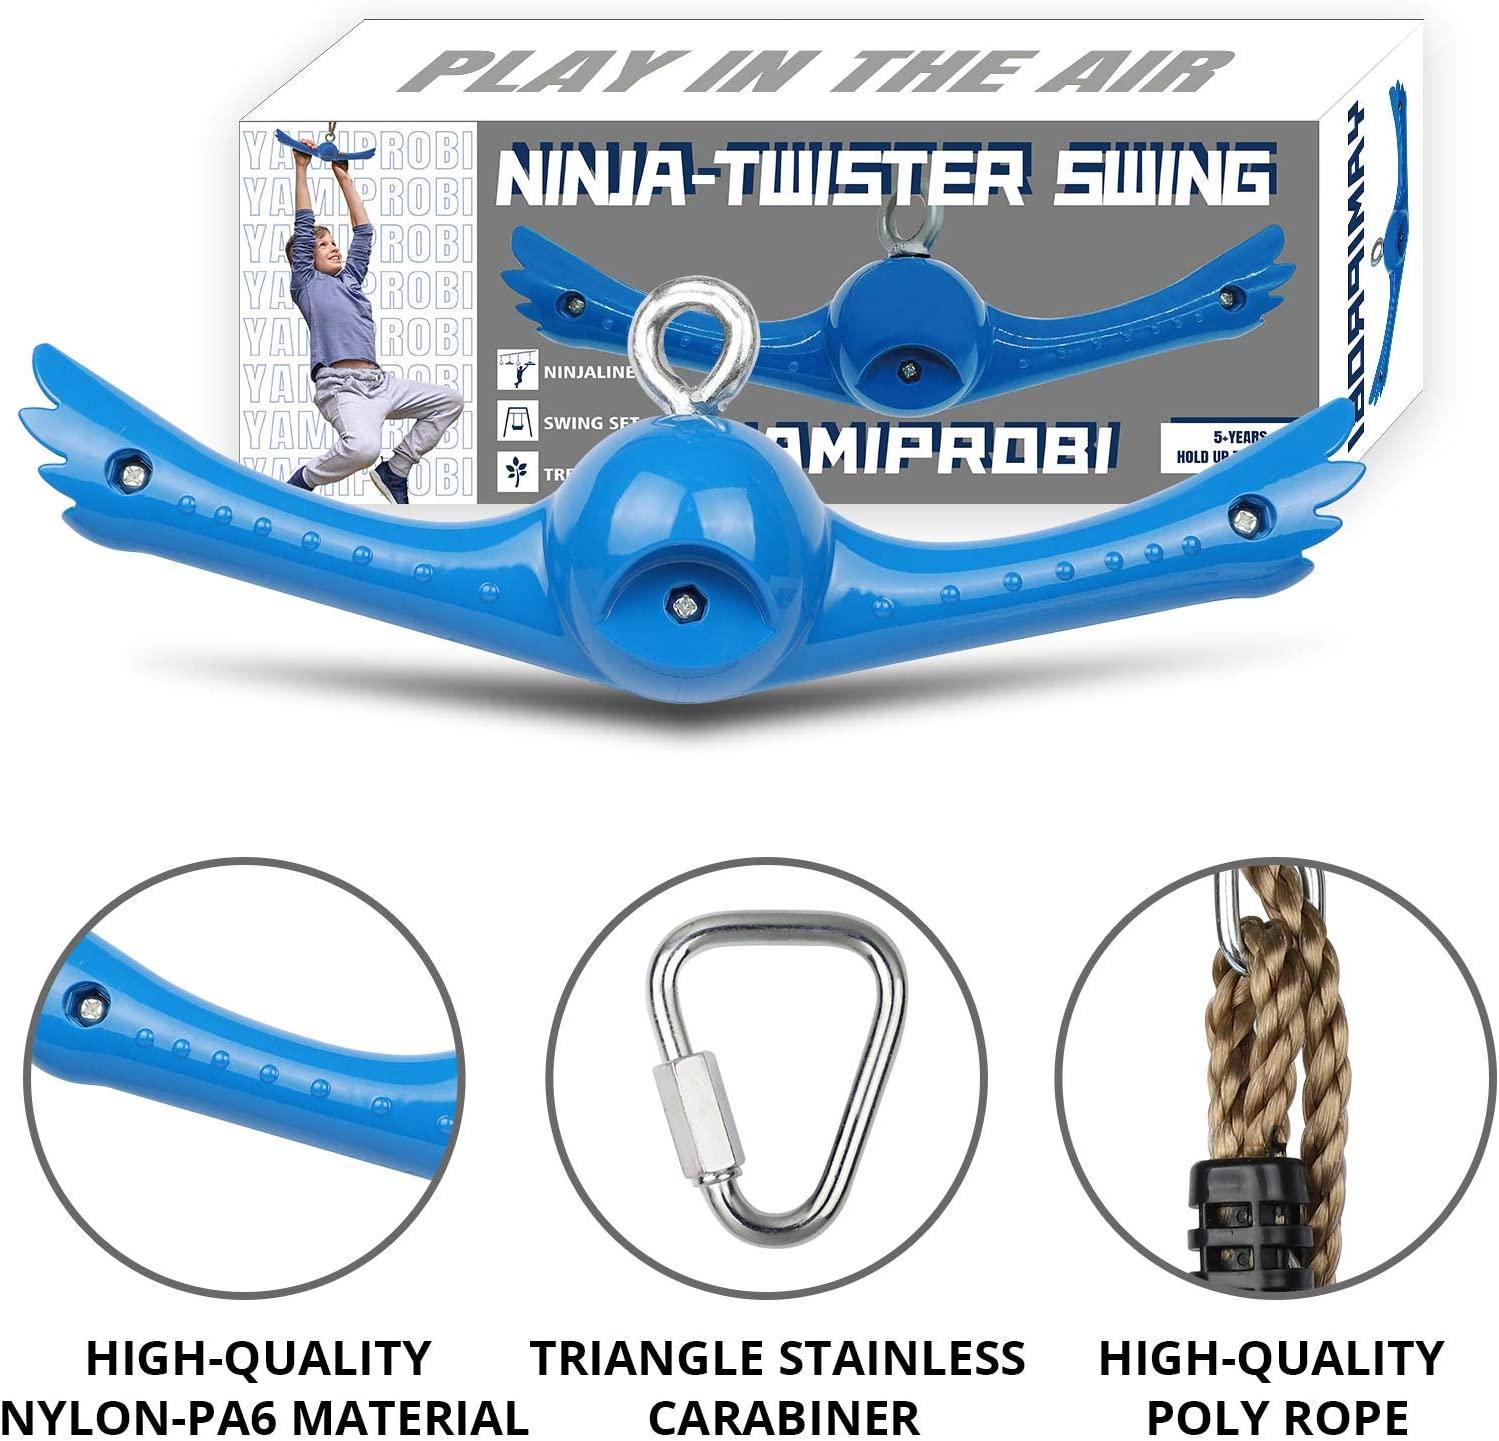 YAMIPROBI Ninja-Twister Swing Spins Set: Slackline Attachments